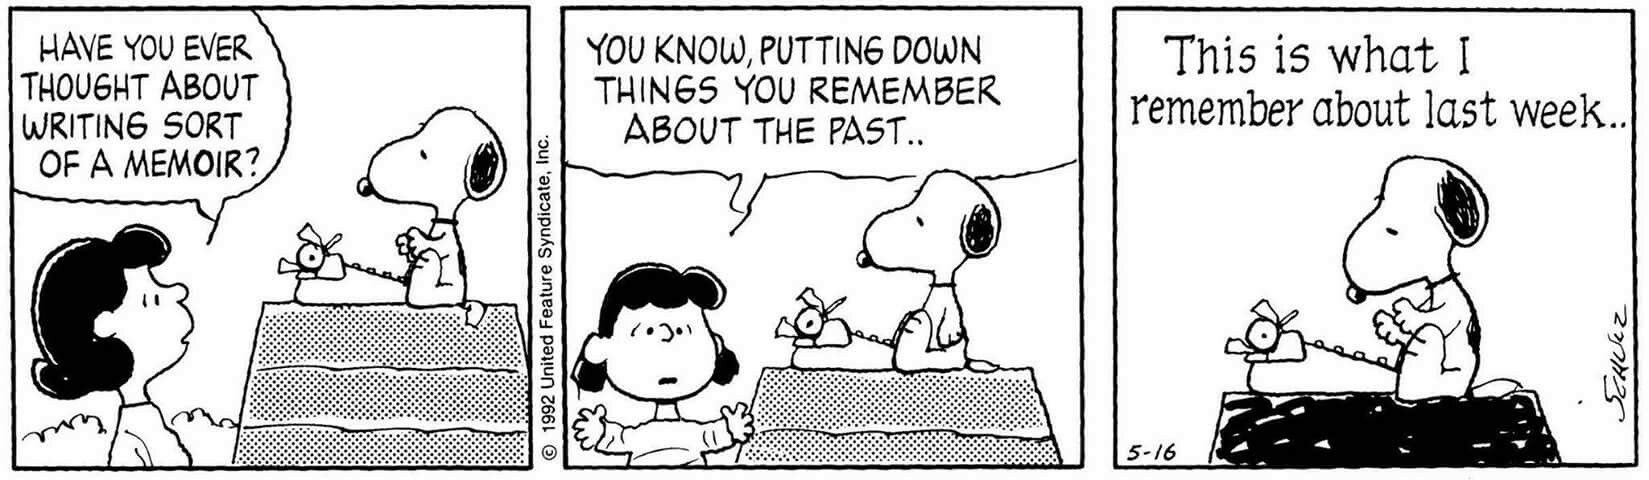 Snoopy writes a memoir